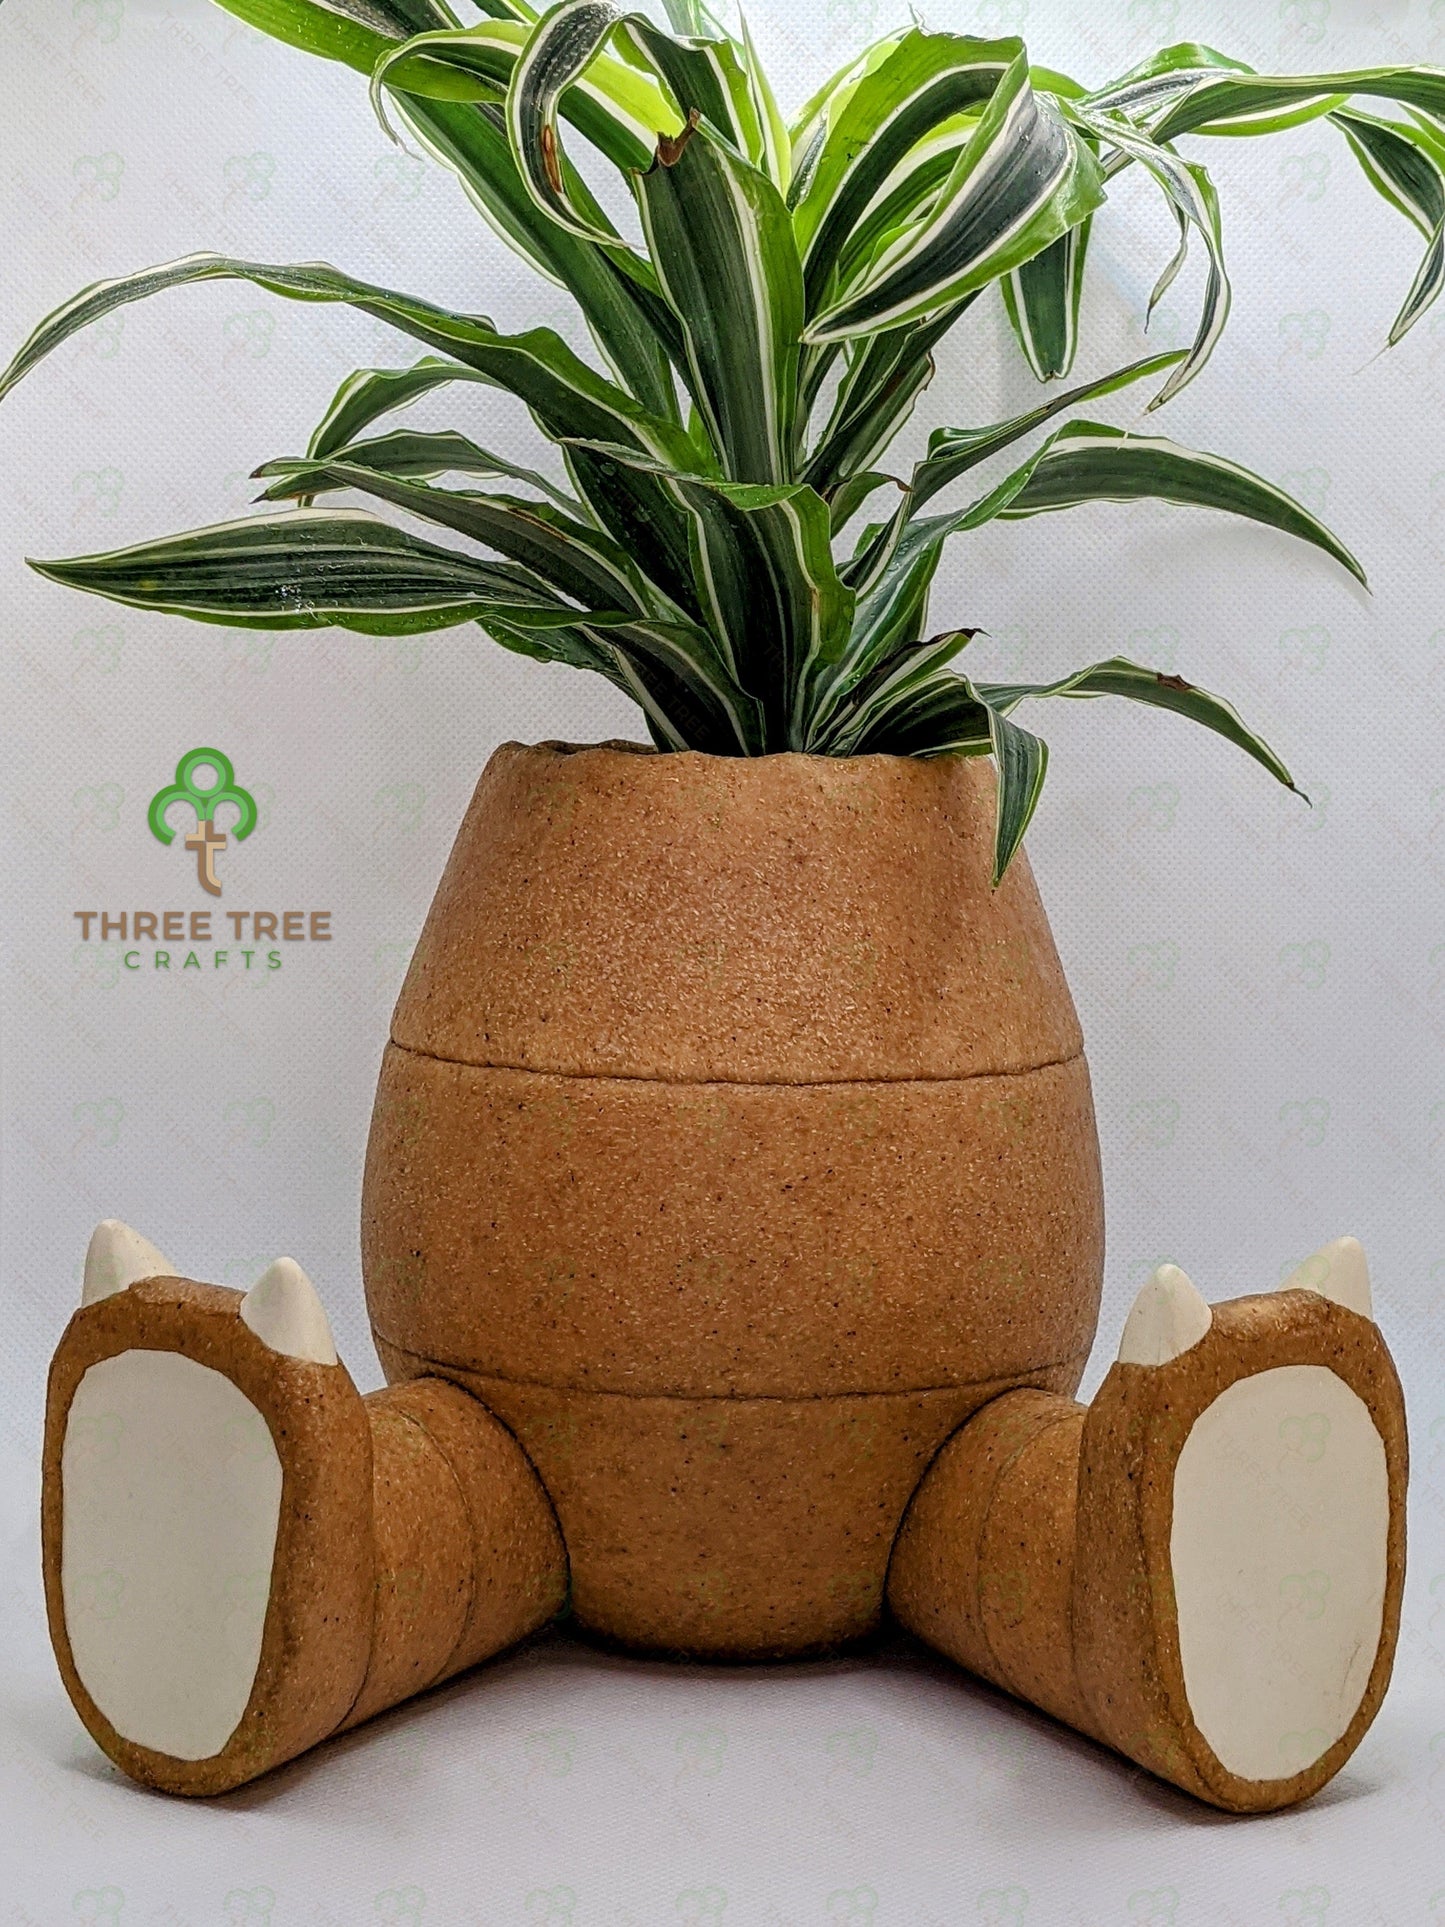 ThreeTreeCrafts Pots & Planters Handmade Exeggutor Inspired Planter